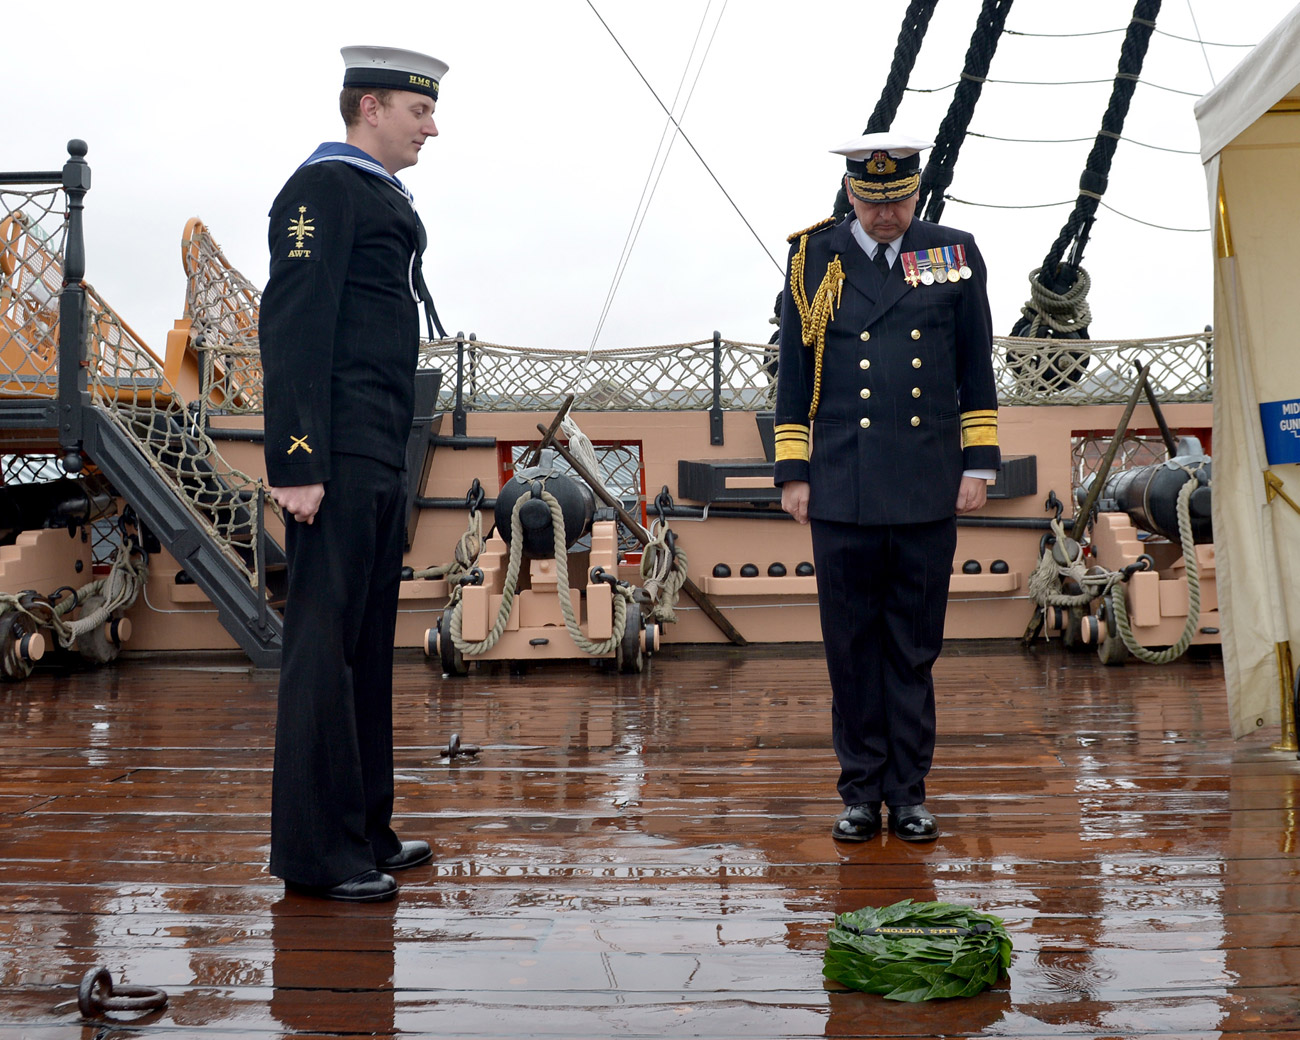 Trafalgar Day commemorated on board HMS Victory Royal Navy